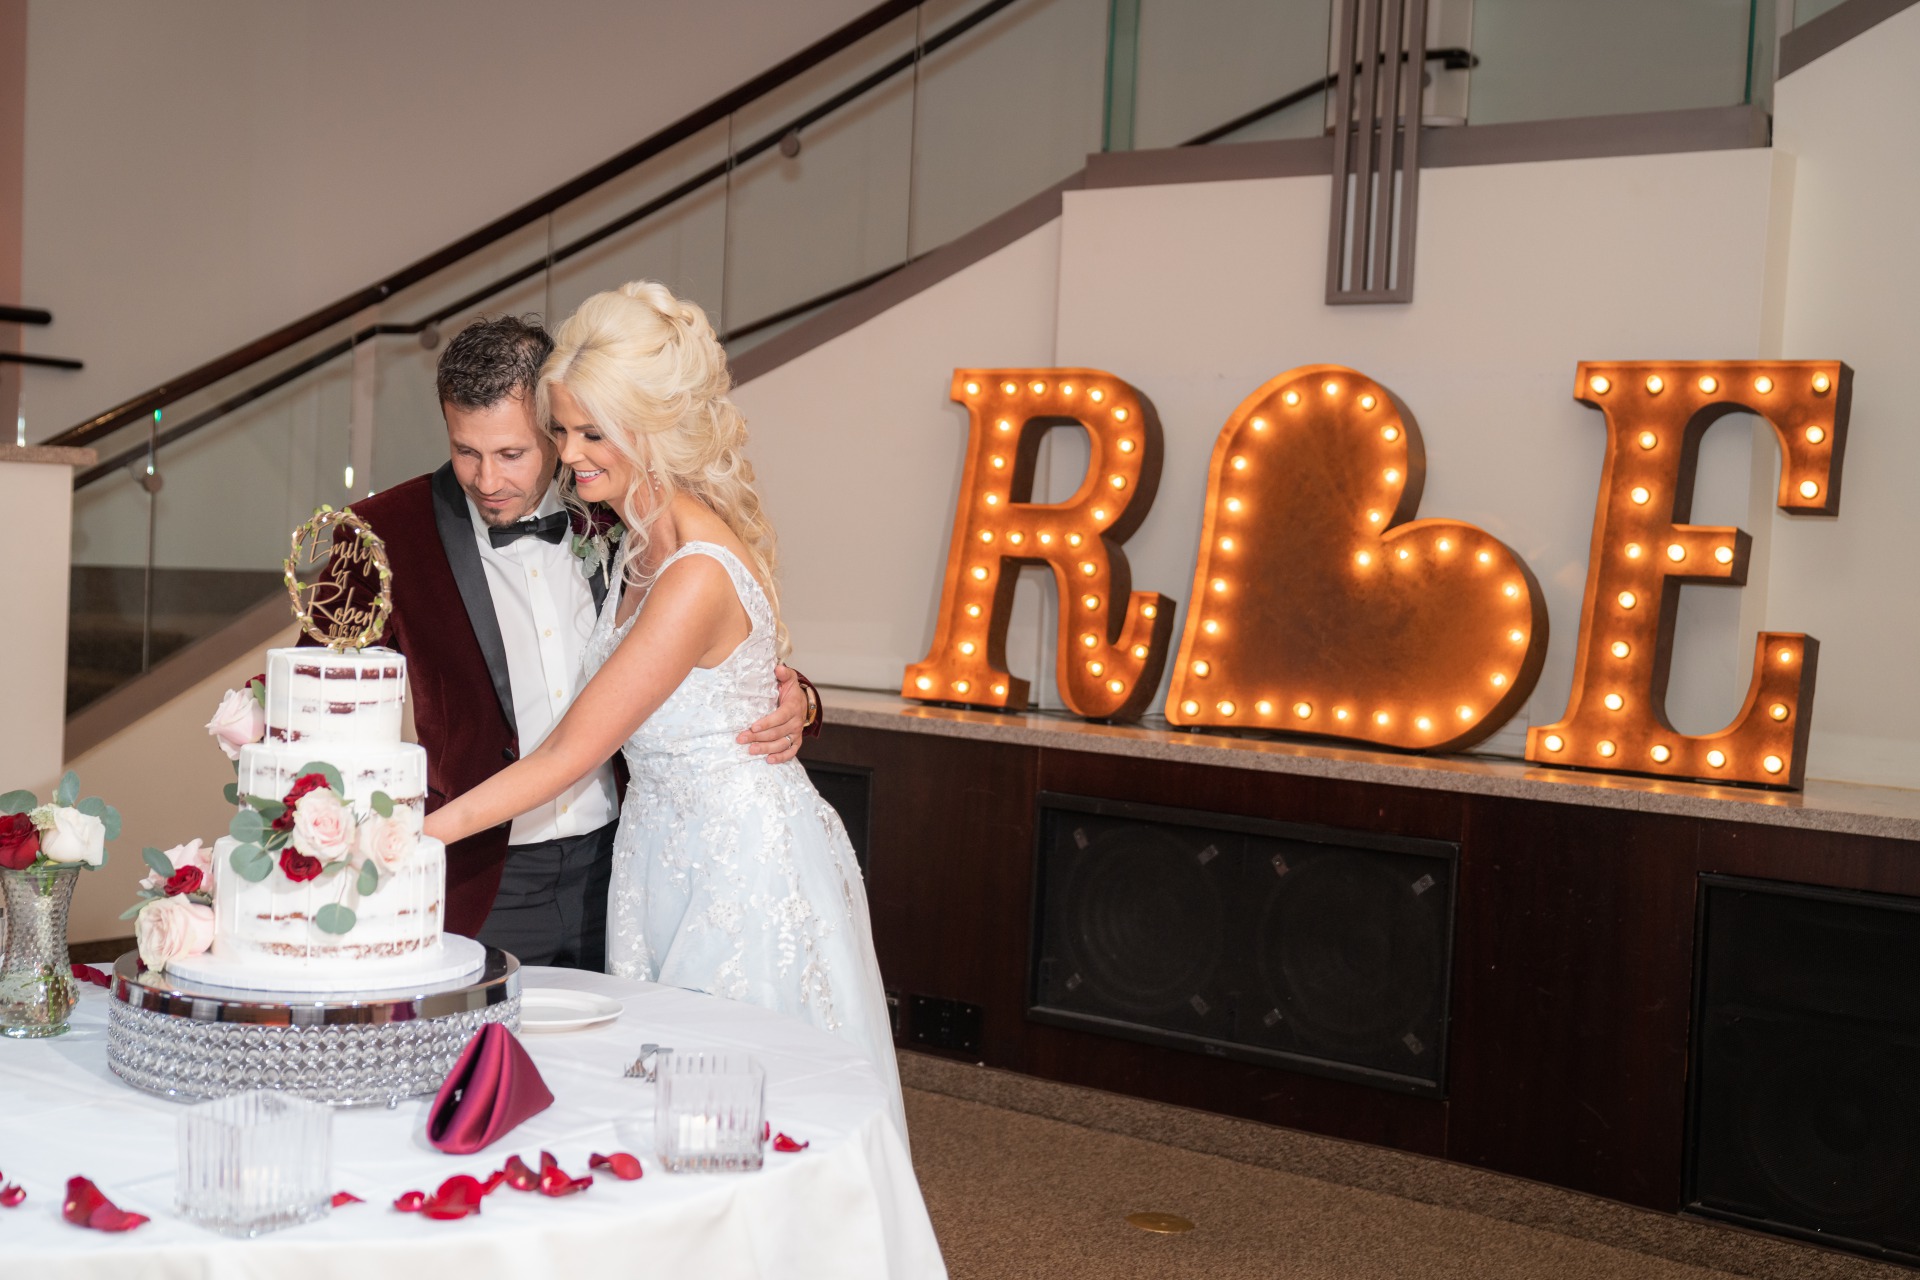 Happy couple cut their wedding cake at their Burgundy and Blush wedding in Las Vegas.